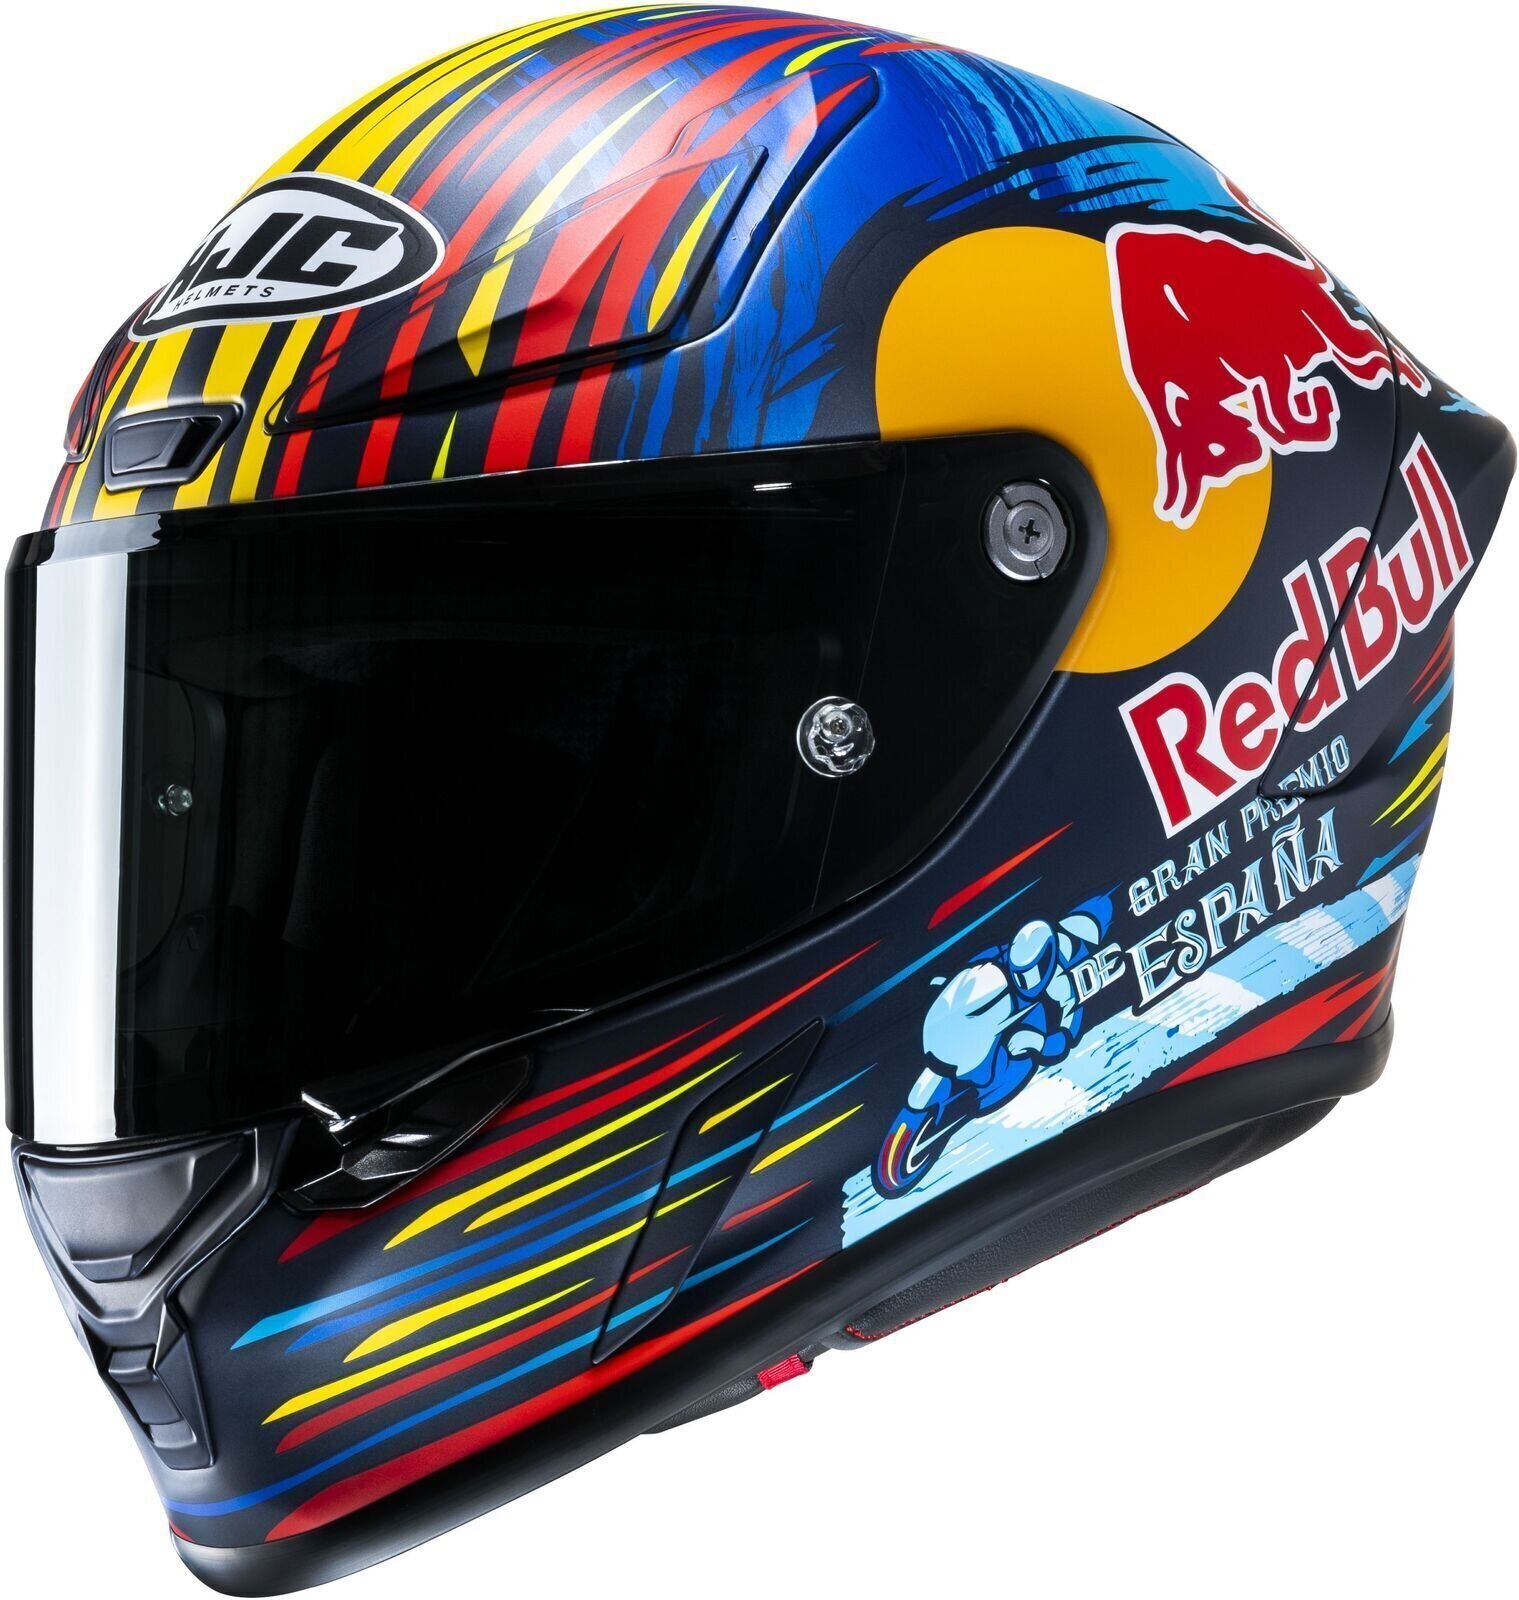 Capacete HJC RPHA 1 Red Bull Jerez GP MC21SF XS Capacete